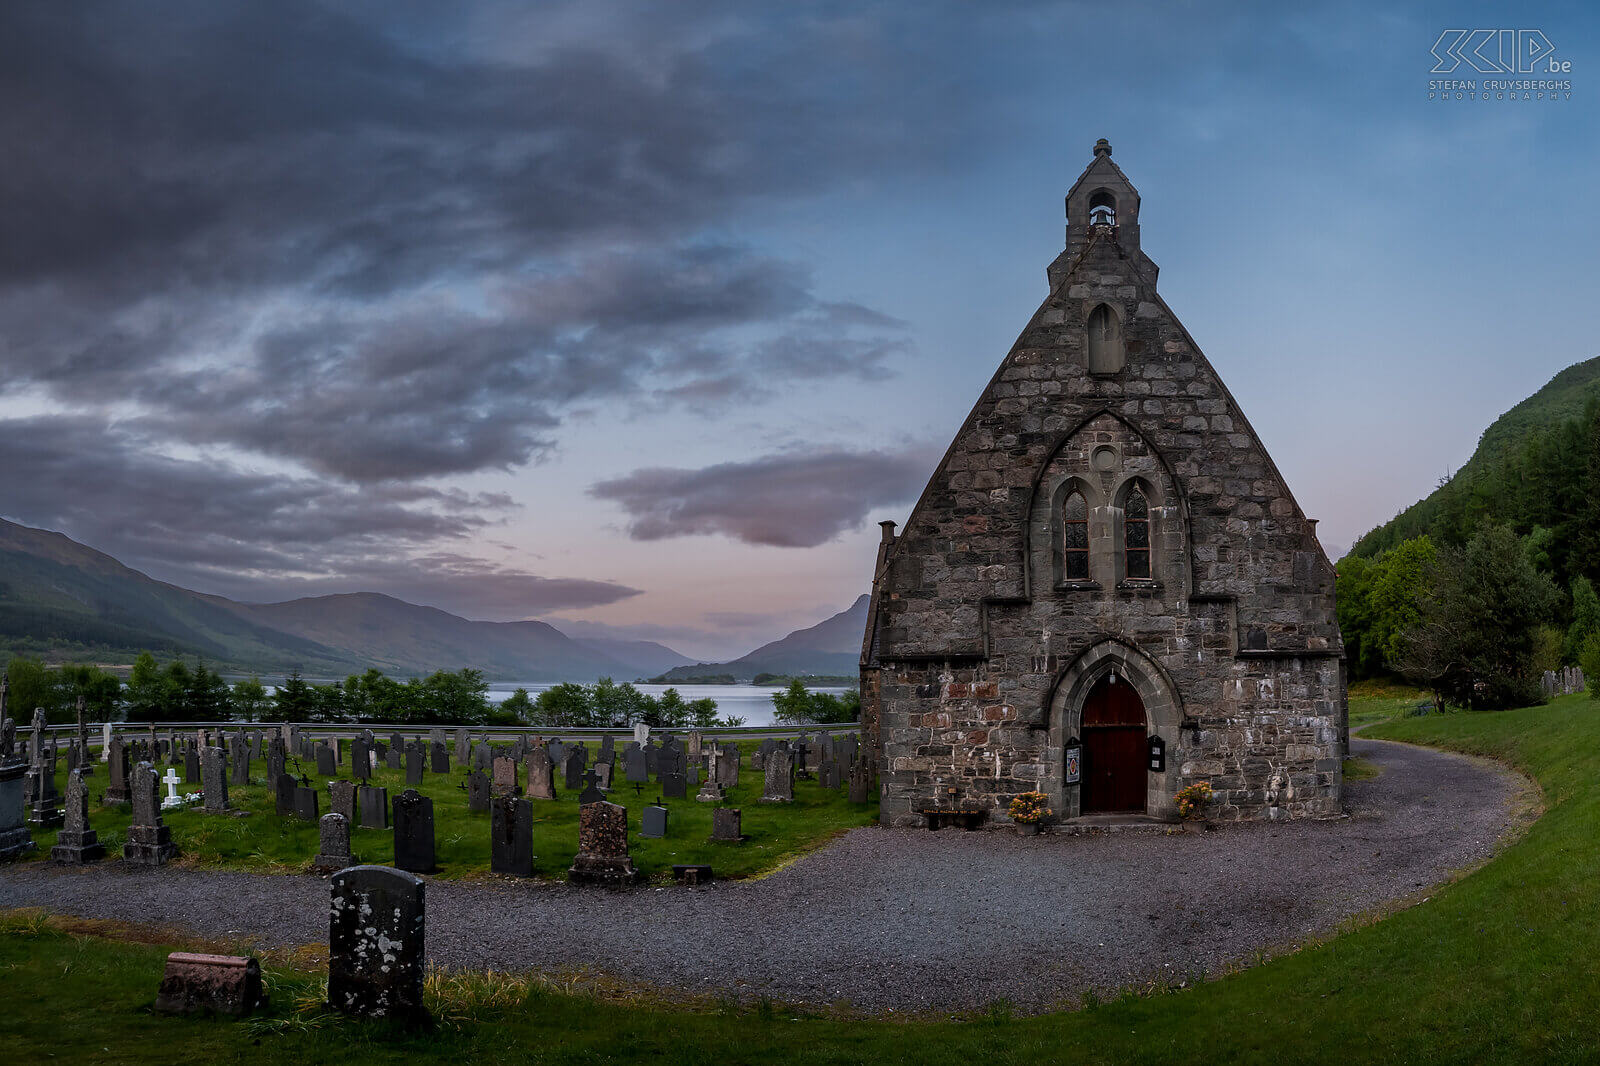 Ballachulish - St Johns kerk St Johns kerk werd gebouwd in 1842 en ligt nabij Loch Leven in het kleine dorpje van Ballachulish Stefan Cruysberghs